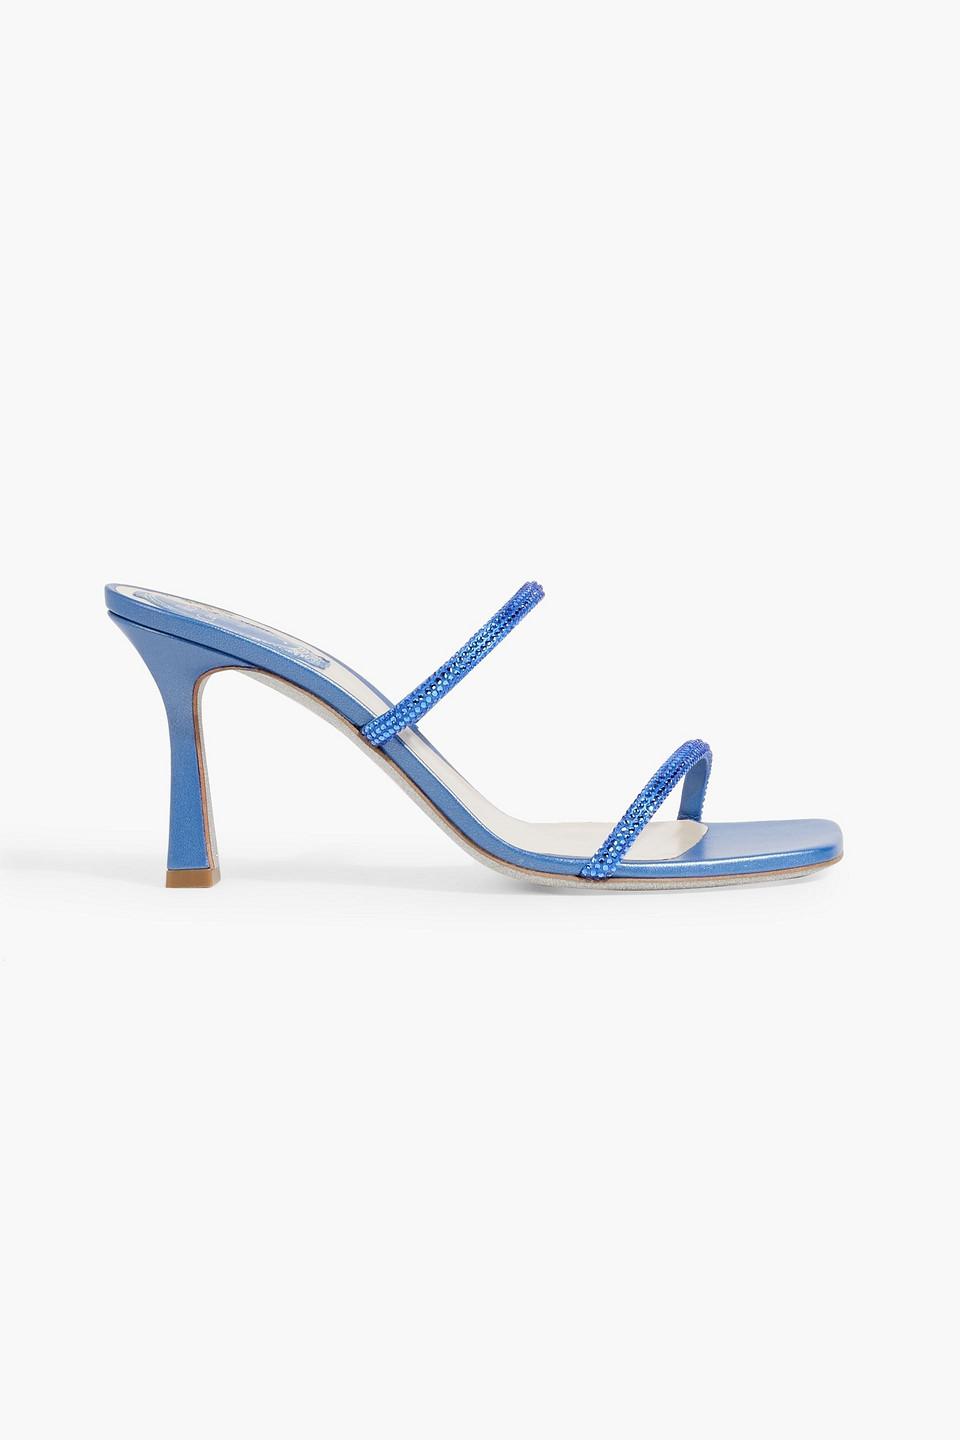 Rene Caovilla Bessie Crystal-embellished Satin Sandals in Blue | Lyst